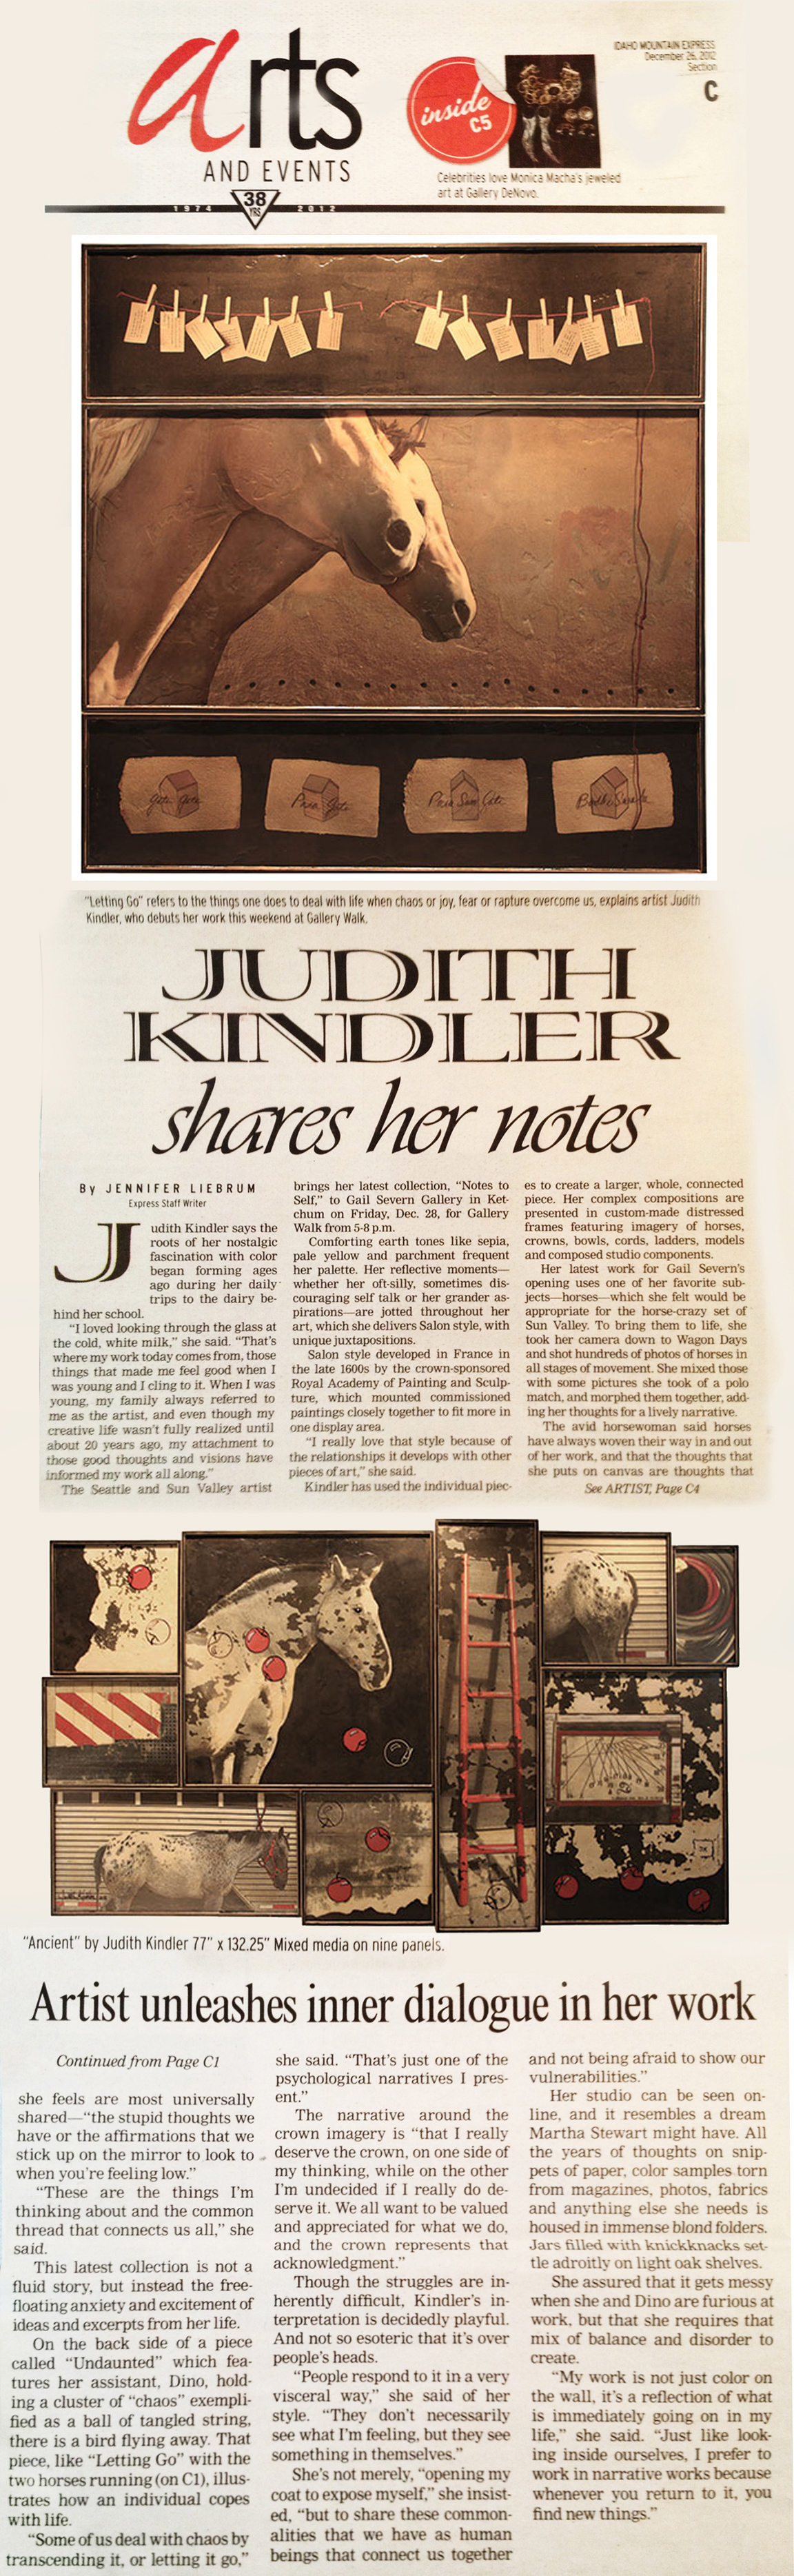 judith kindler review